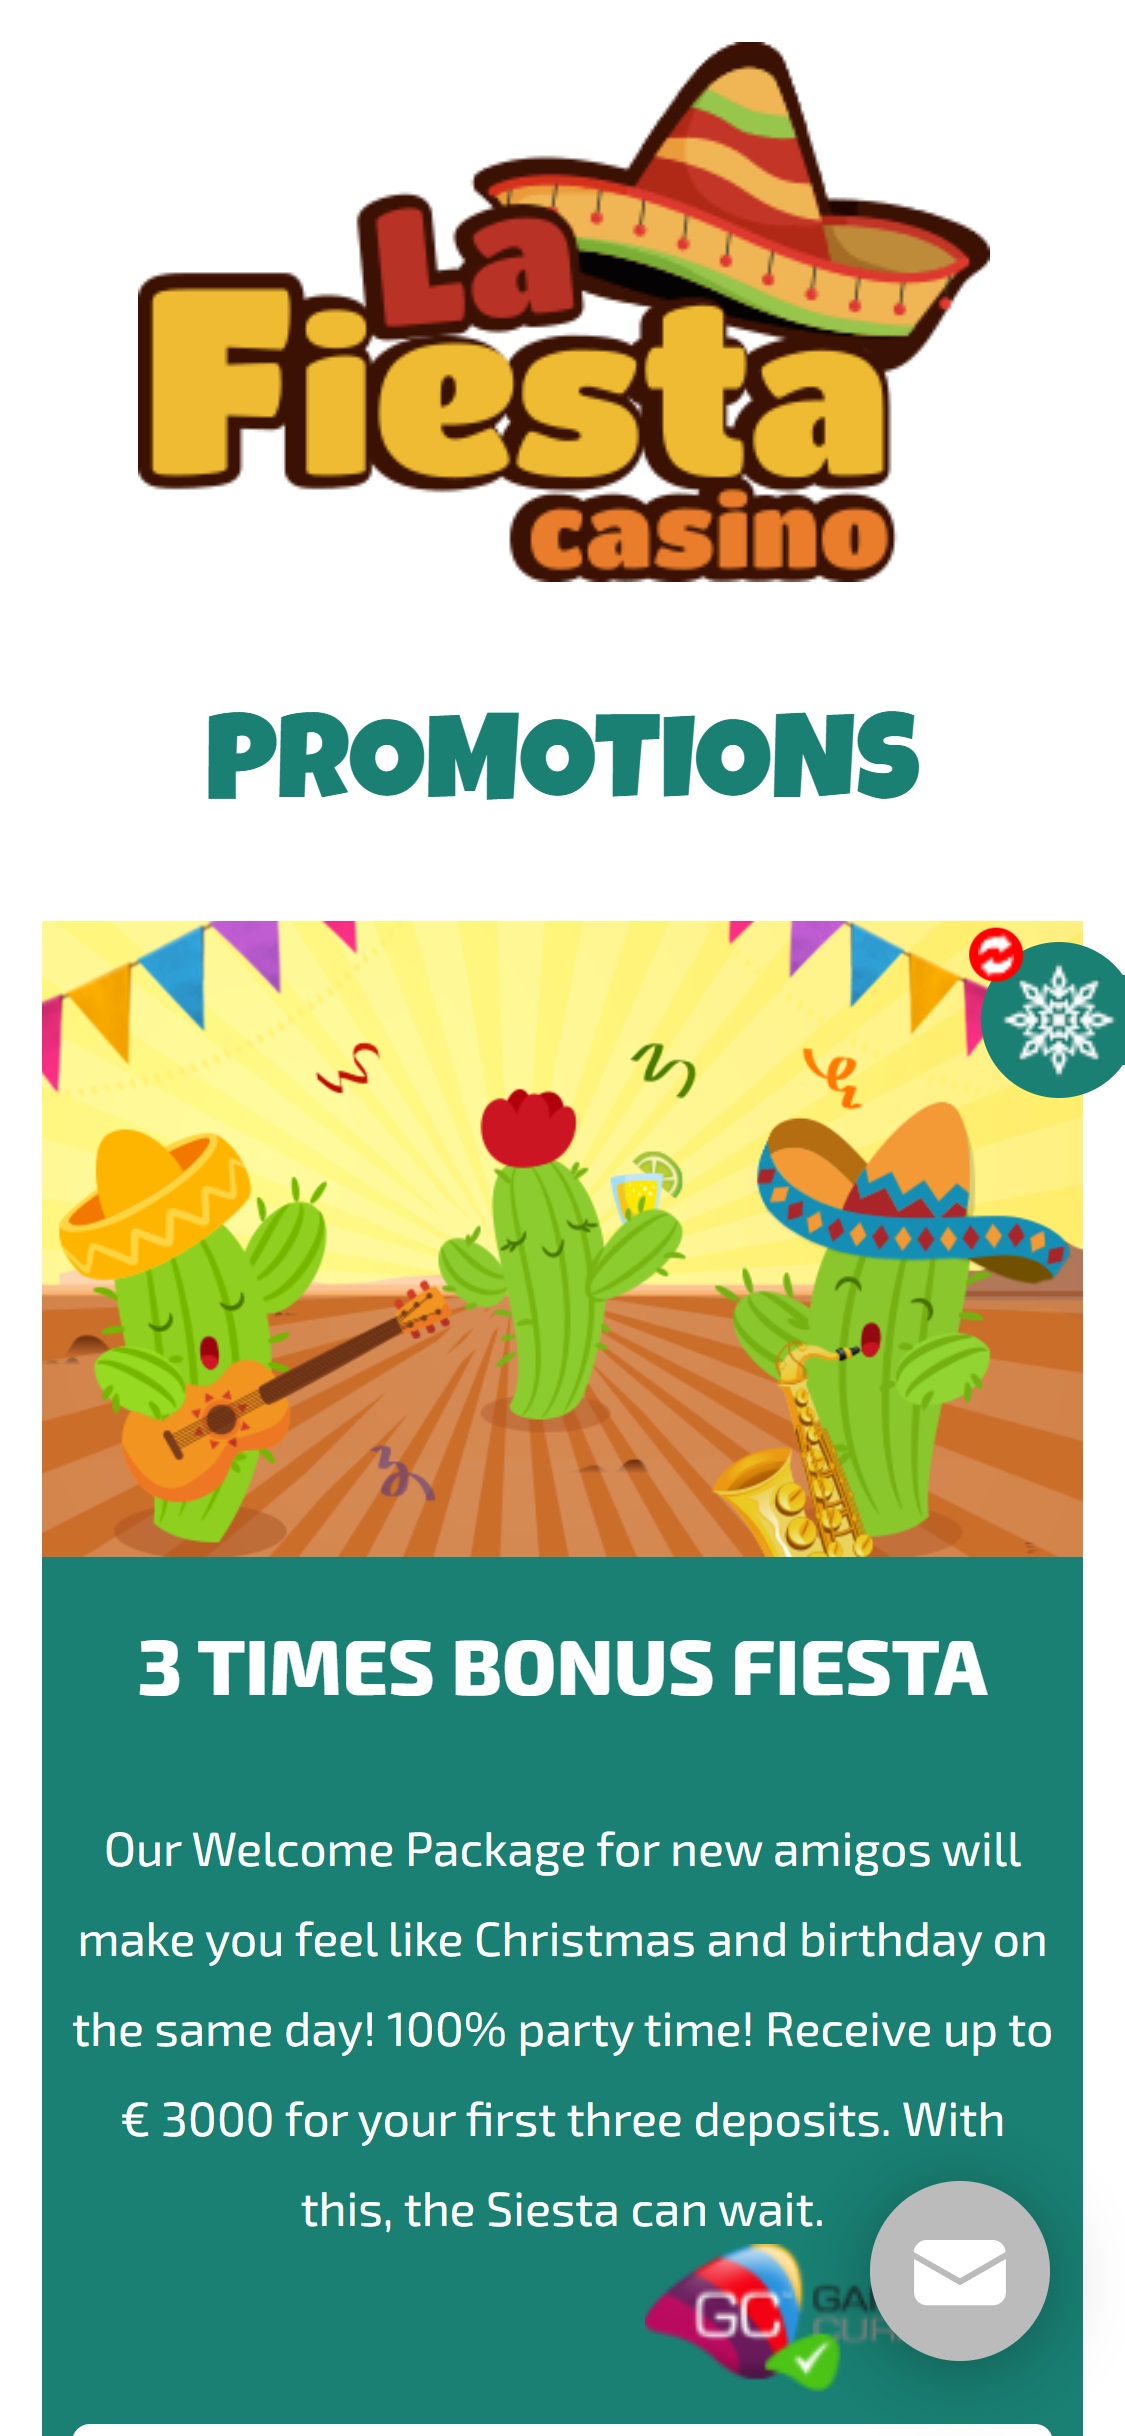 Casino La Fiesta Mobile No Deposit Bonus Review